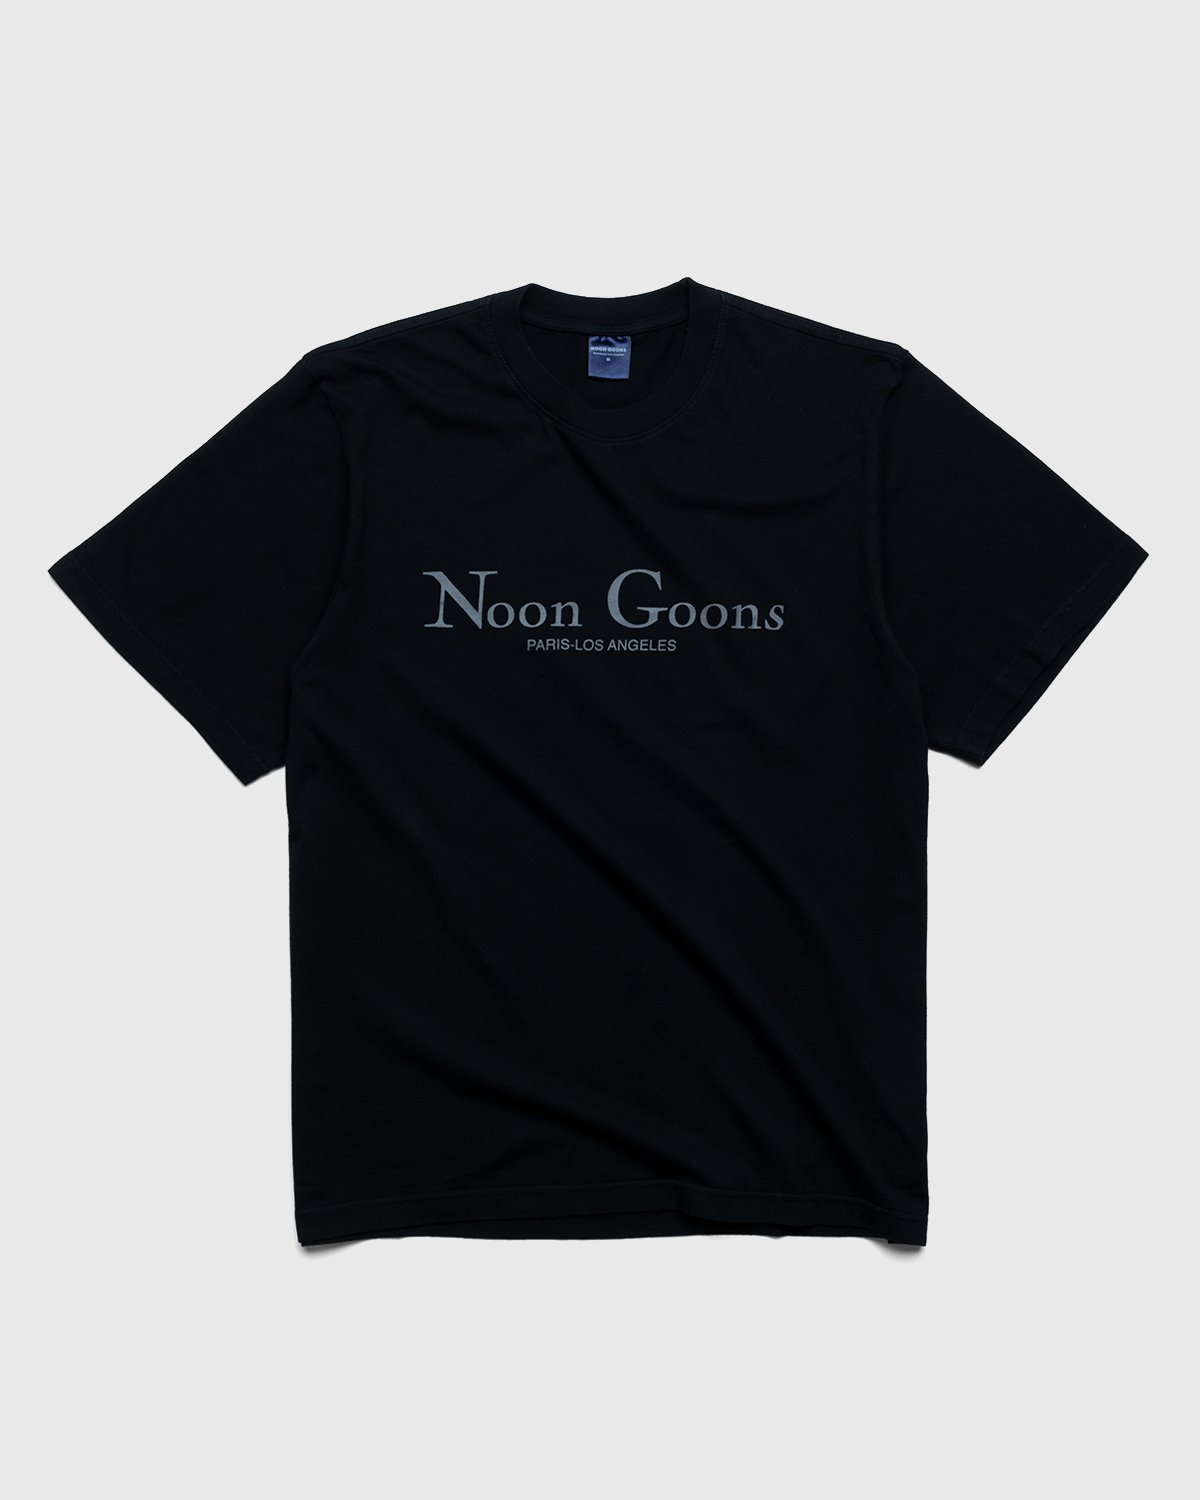 Noon Goons - Sister City T-Shirt Black - Clothing - Black - Image 1